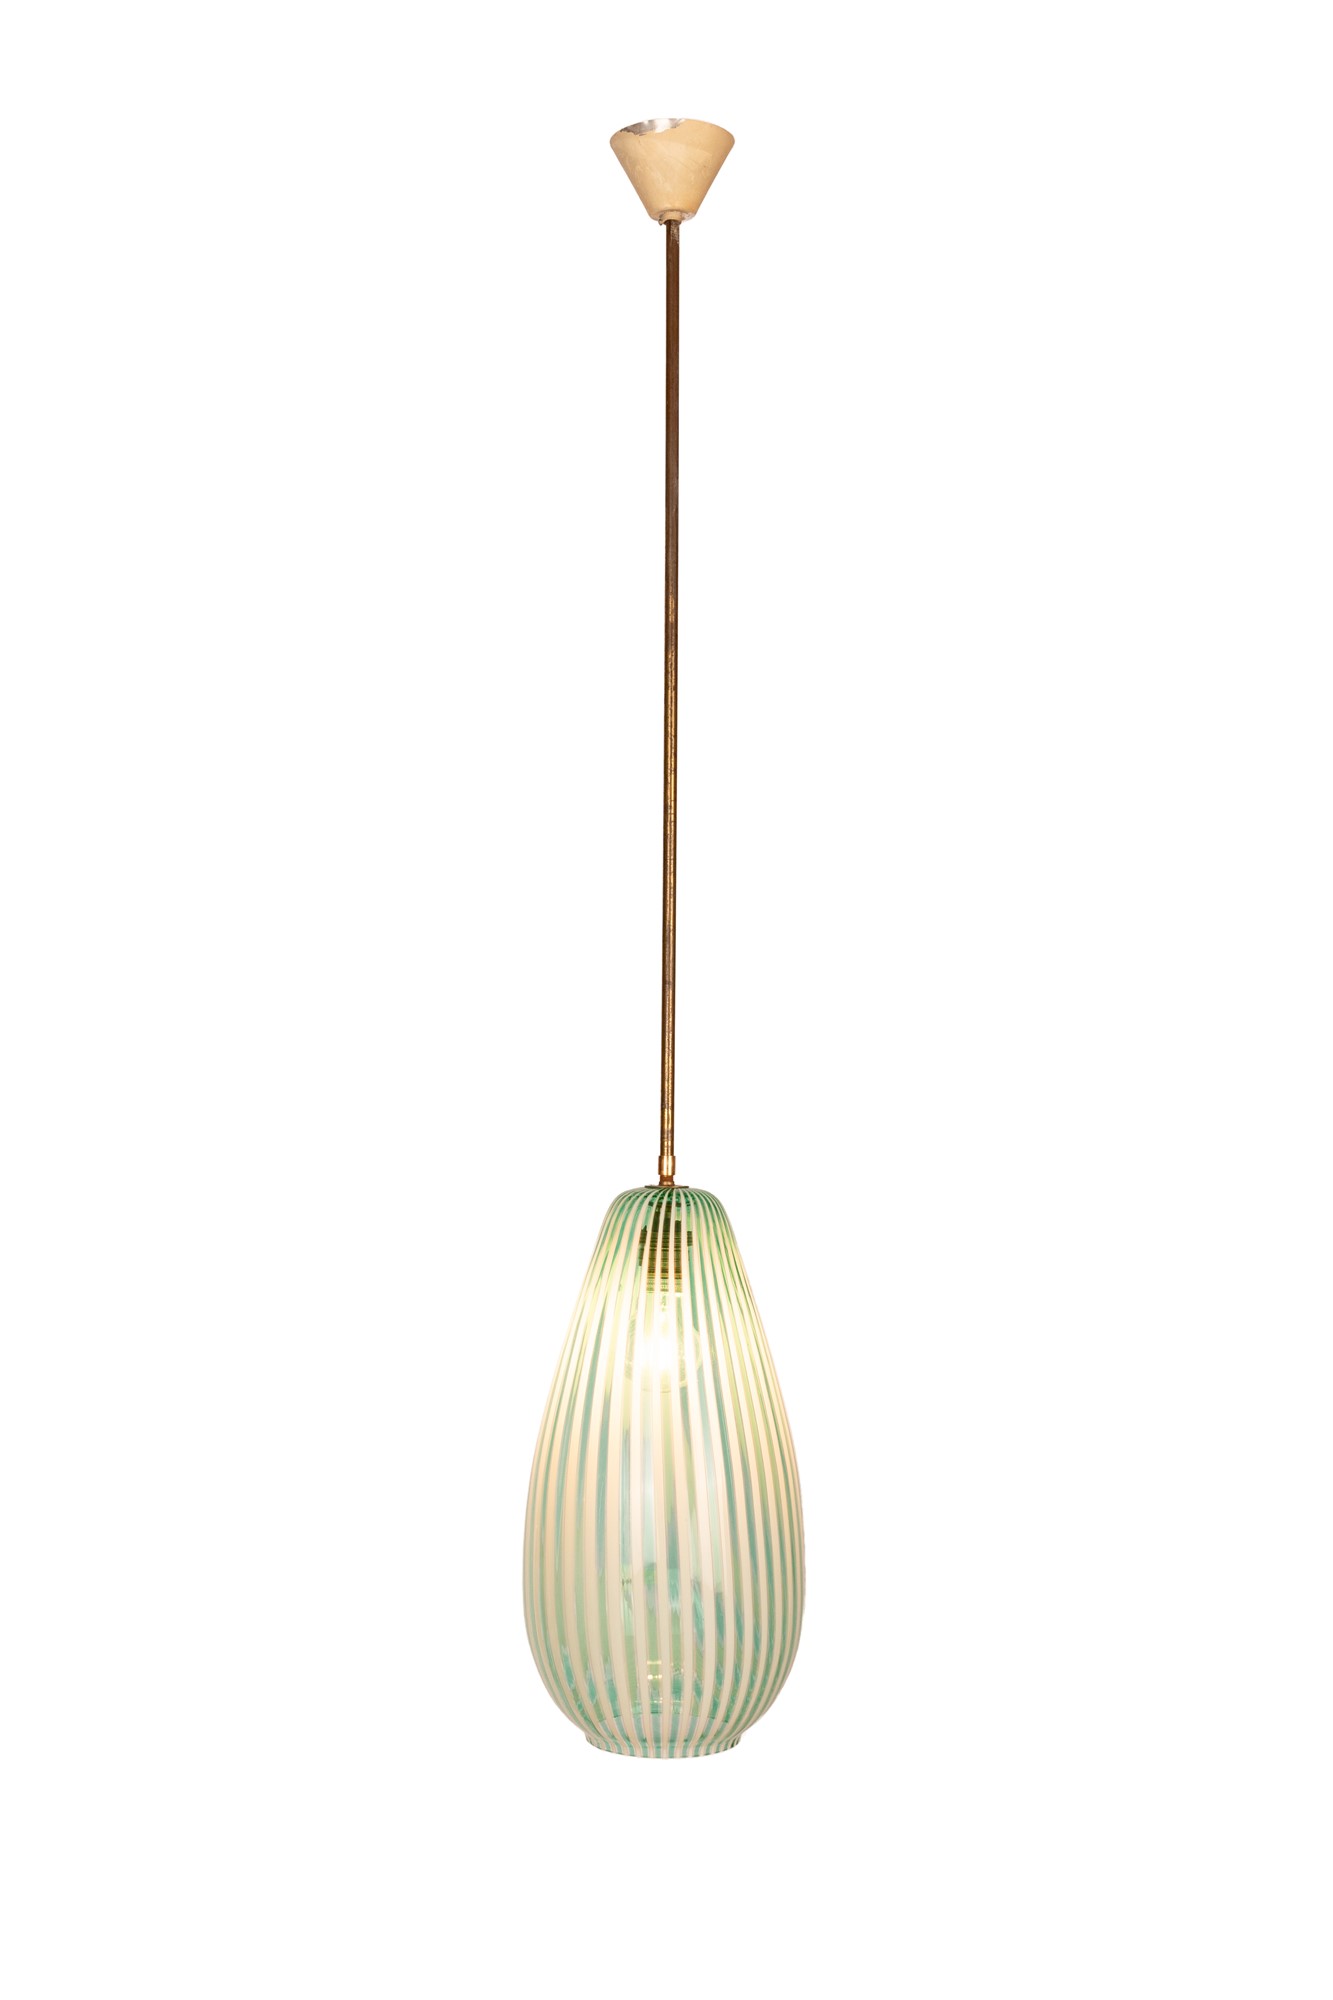 Hanging lamp in zanrifico glass - Image 13 of 16